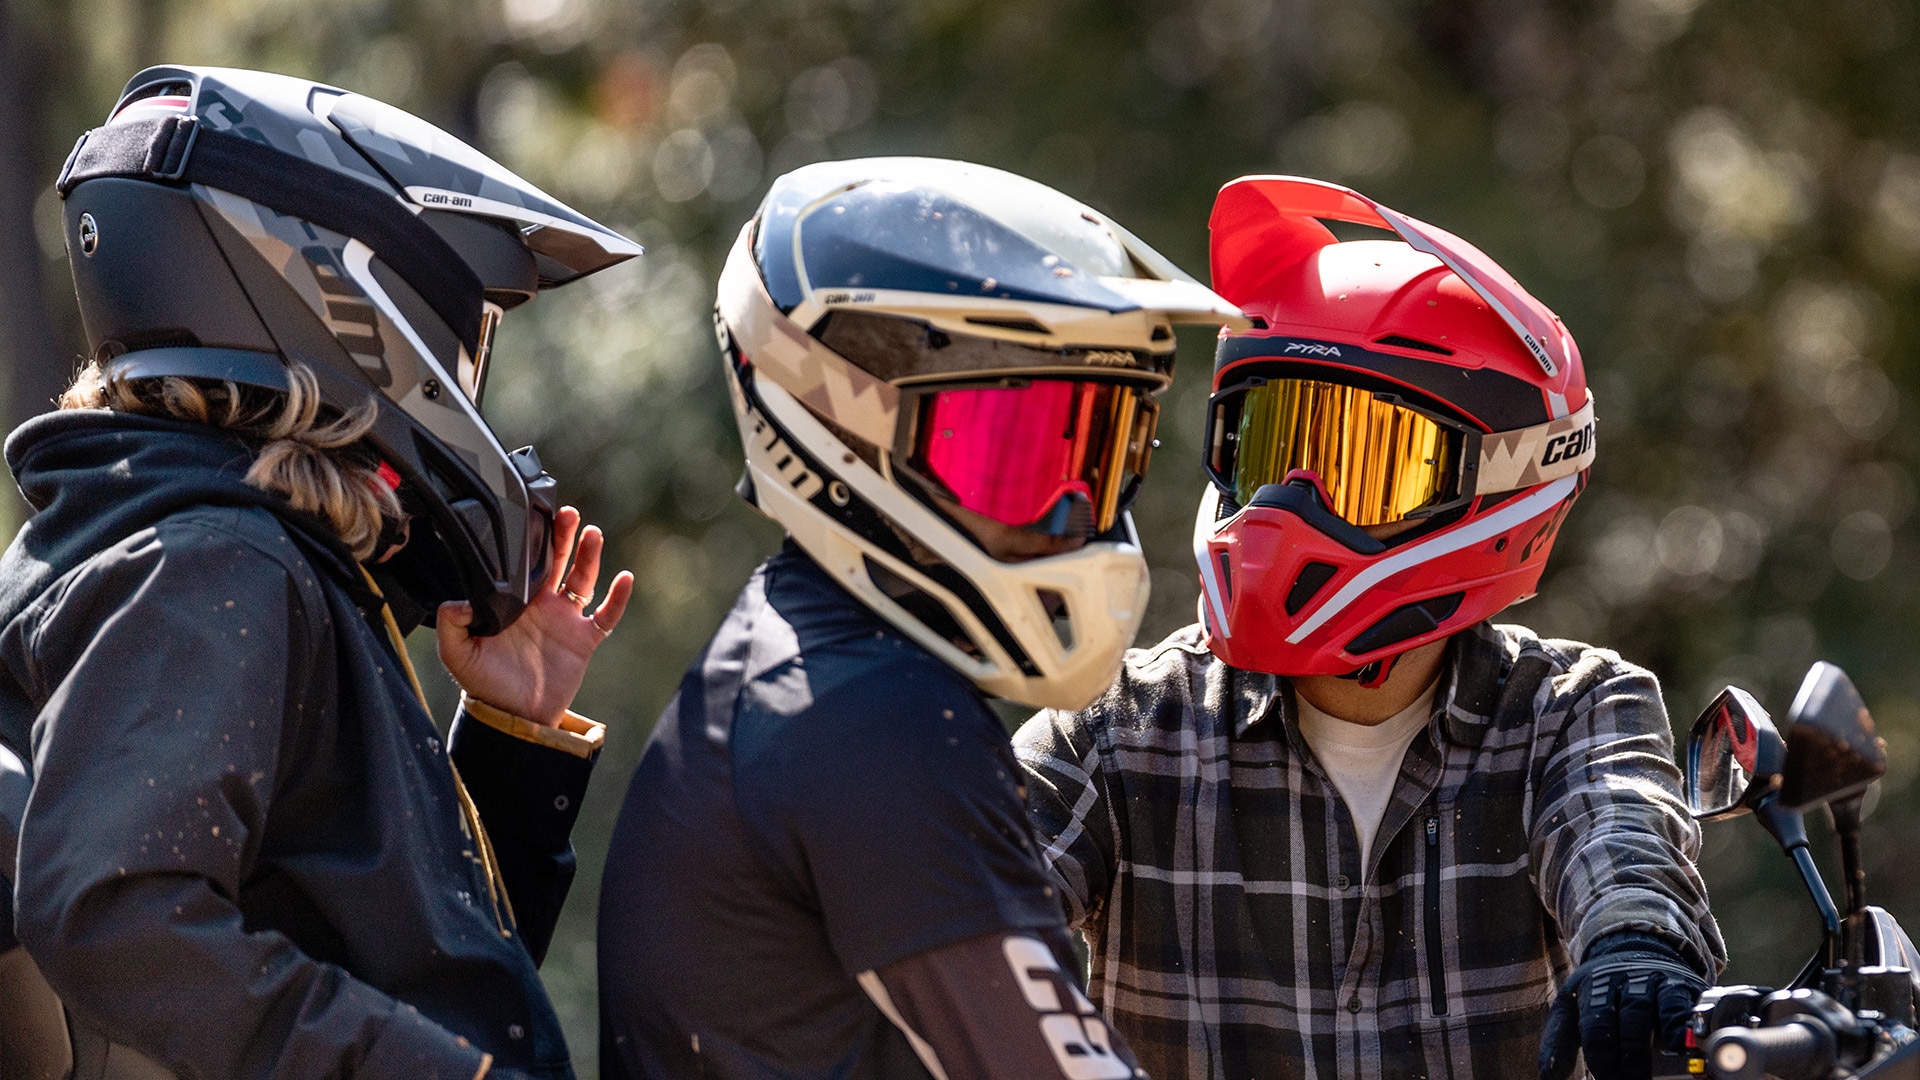 Three riders wearing Pyra safety helmets